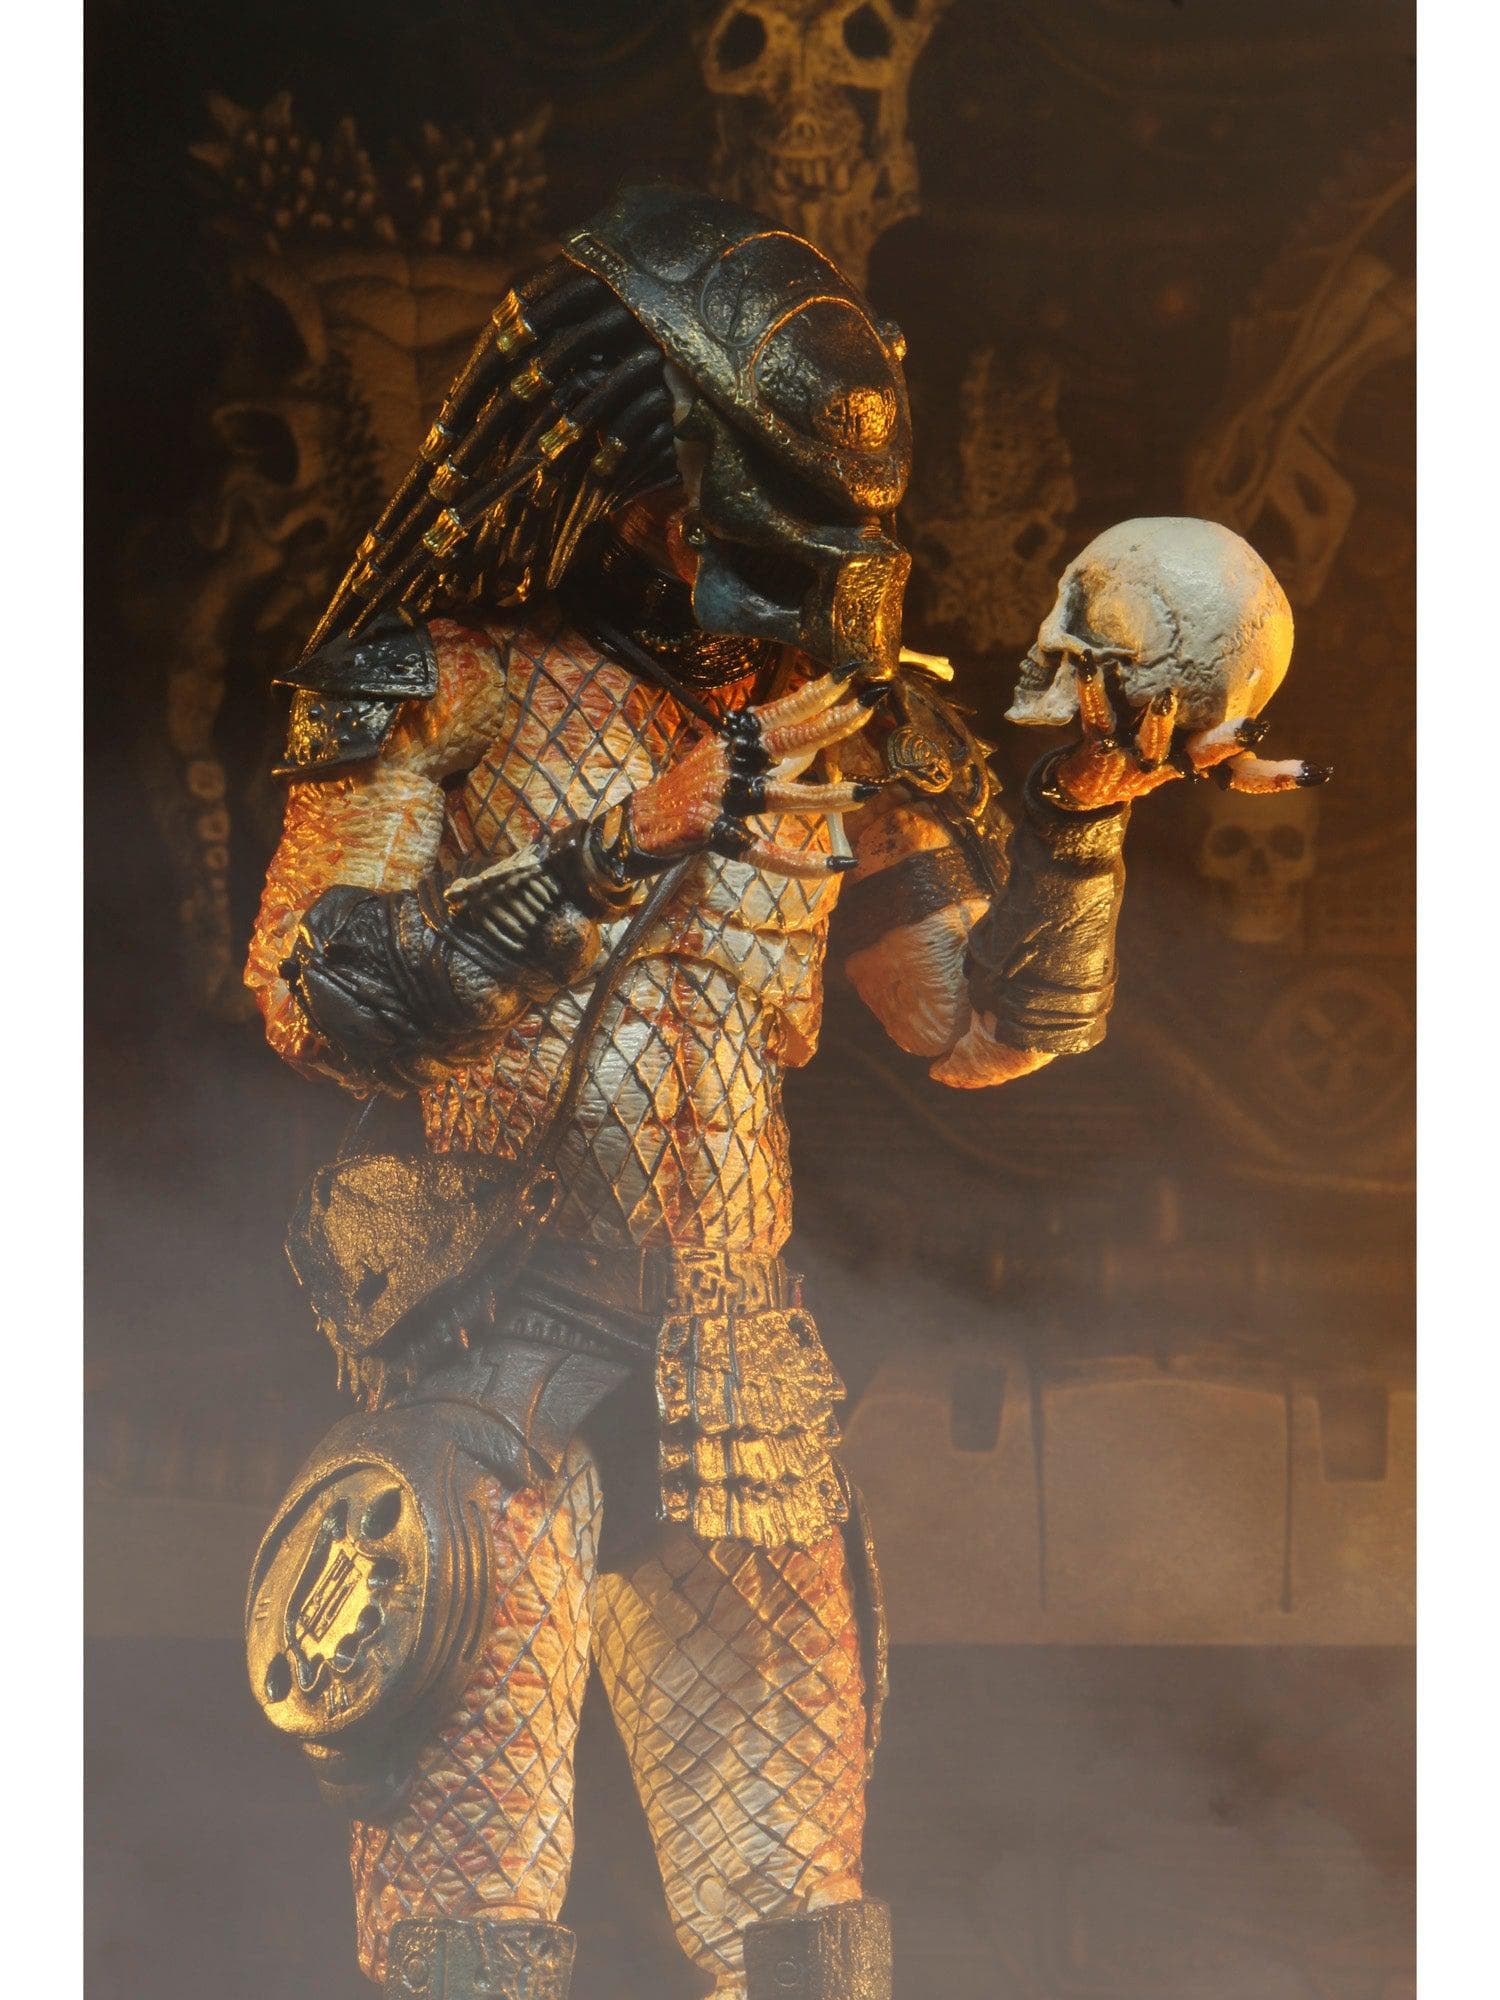 NECA - Predator 2 - 7" Scale Action Figure - Ultimate Stalker Predator - costumes.com